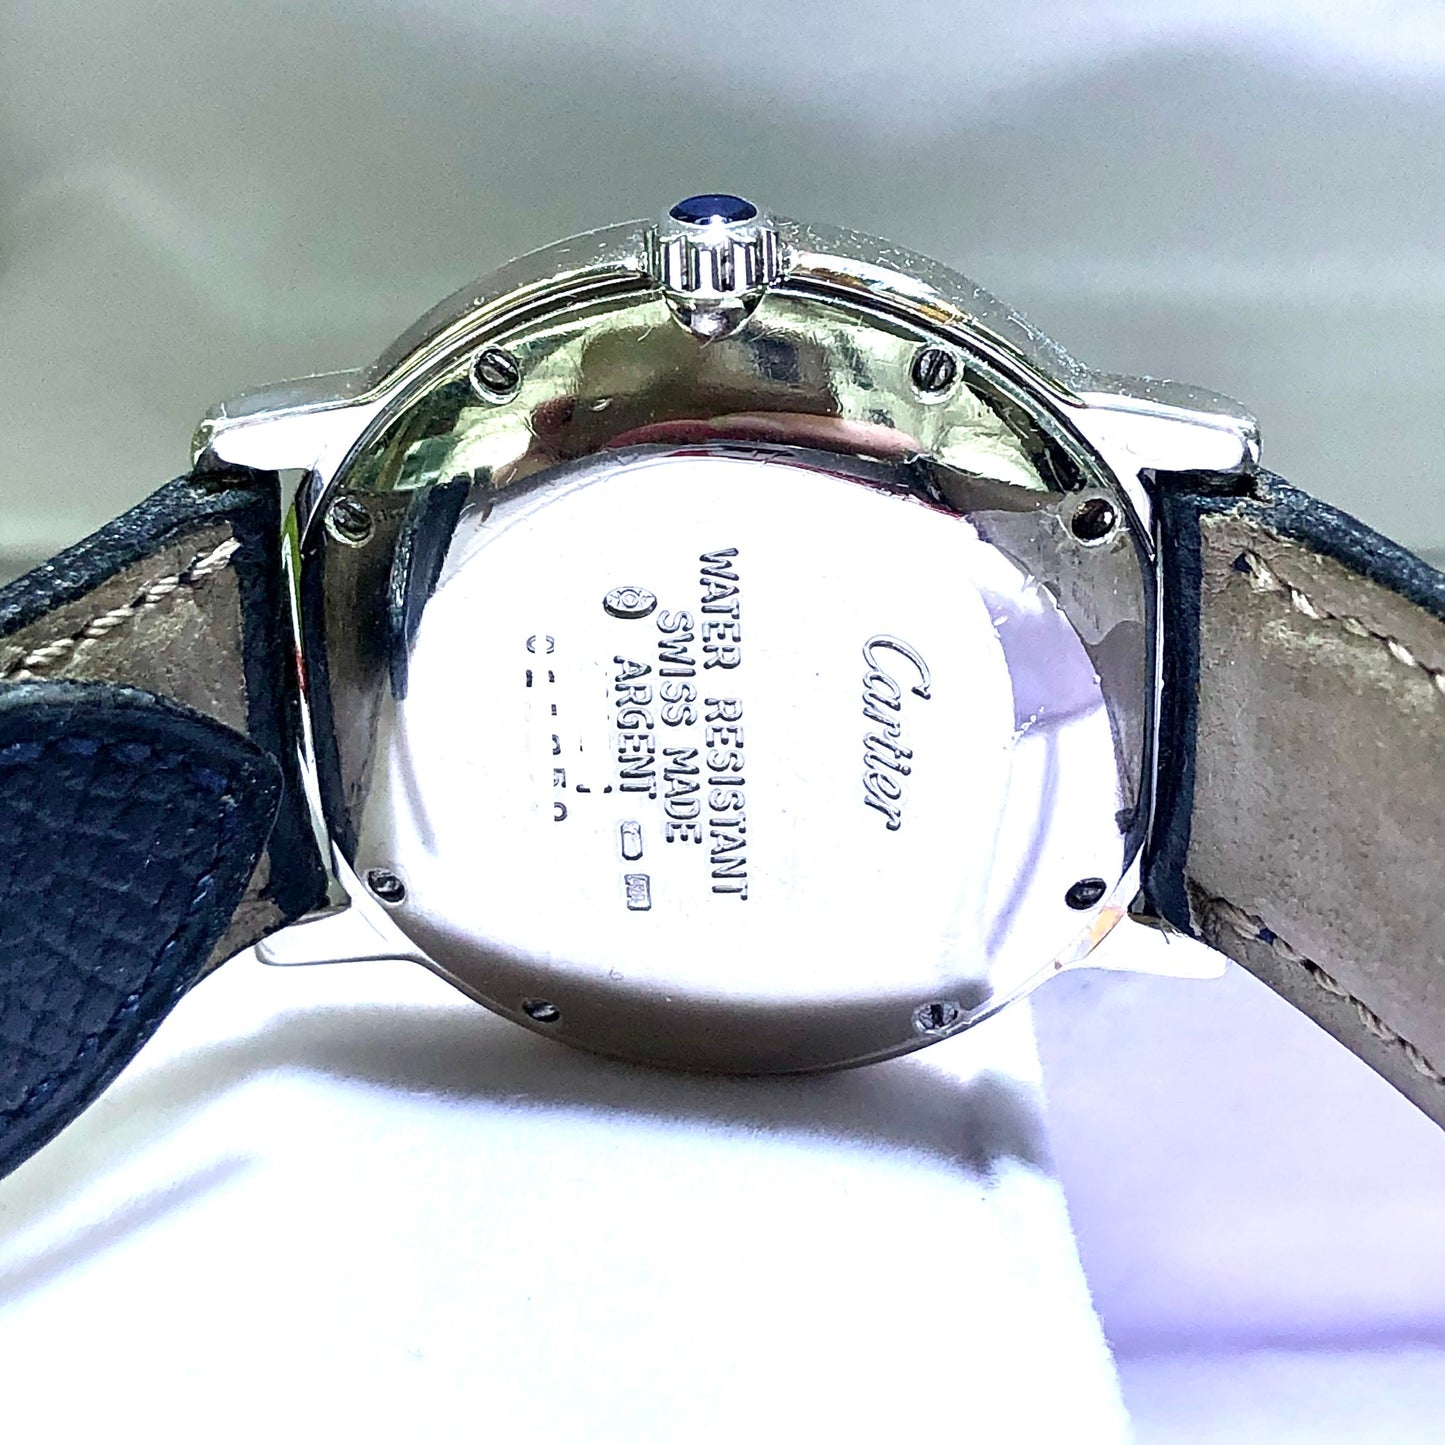 CARTIER RONDE 32mm Quartz Silver 1.33TCW DIAMOND Watch